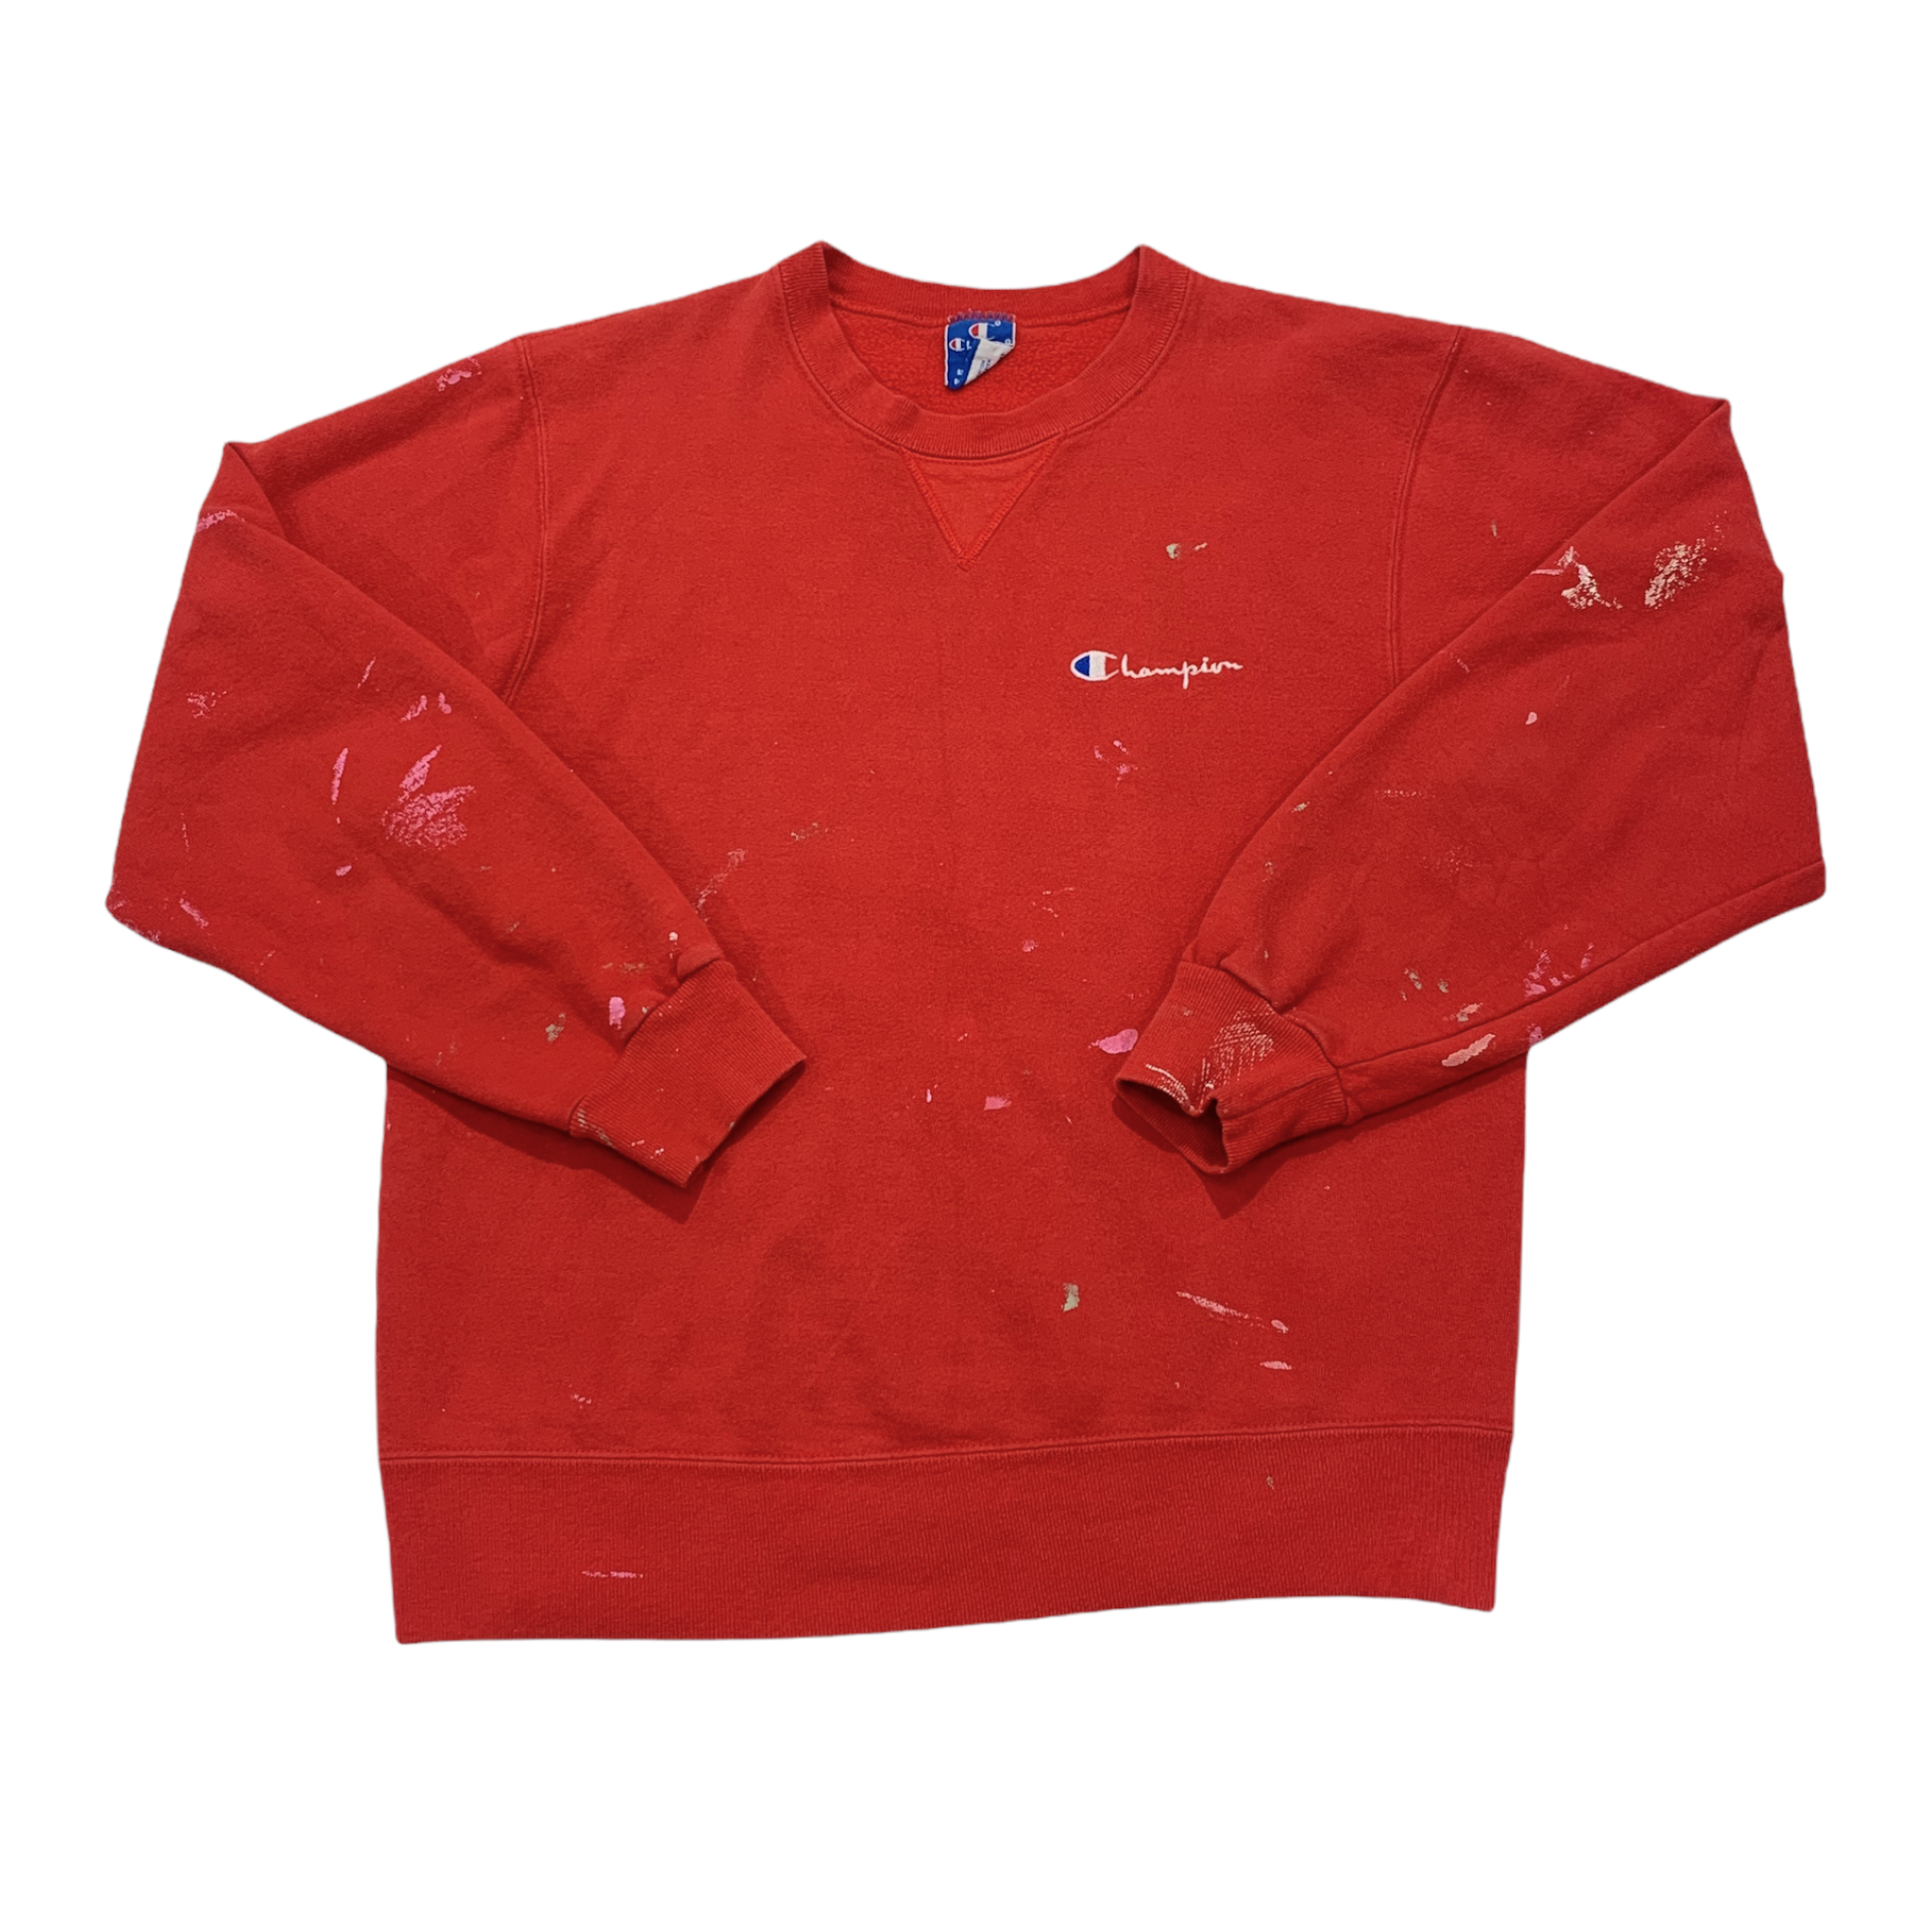 Champion Painter Crewneck Sweatshirt - Red - S/M